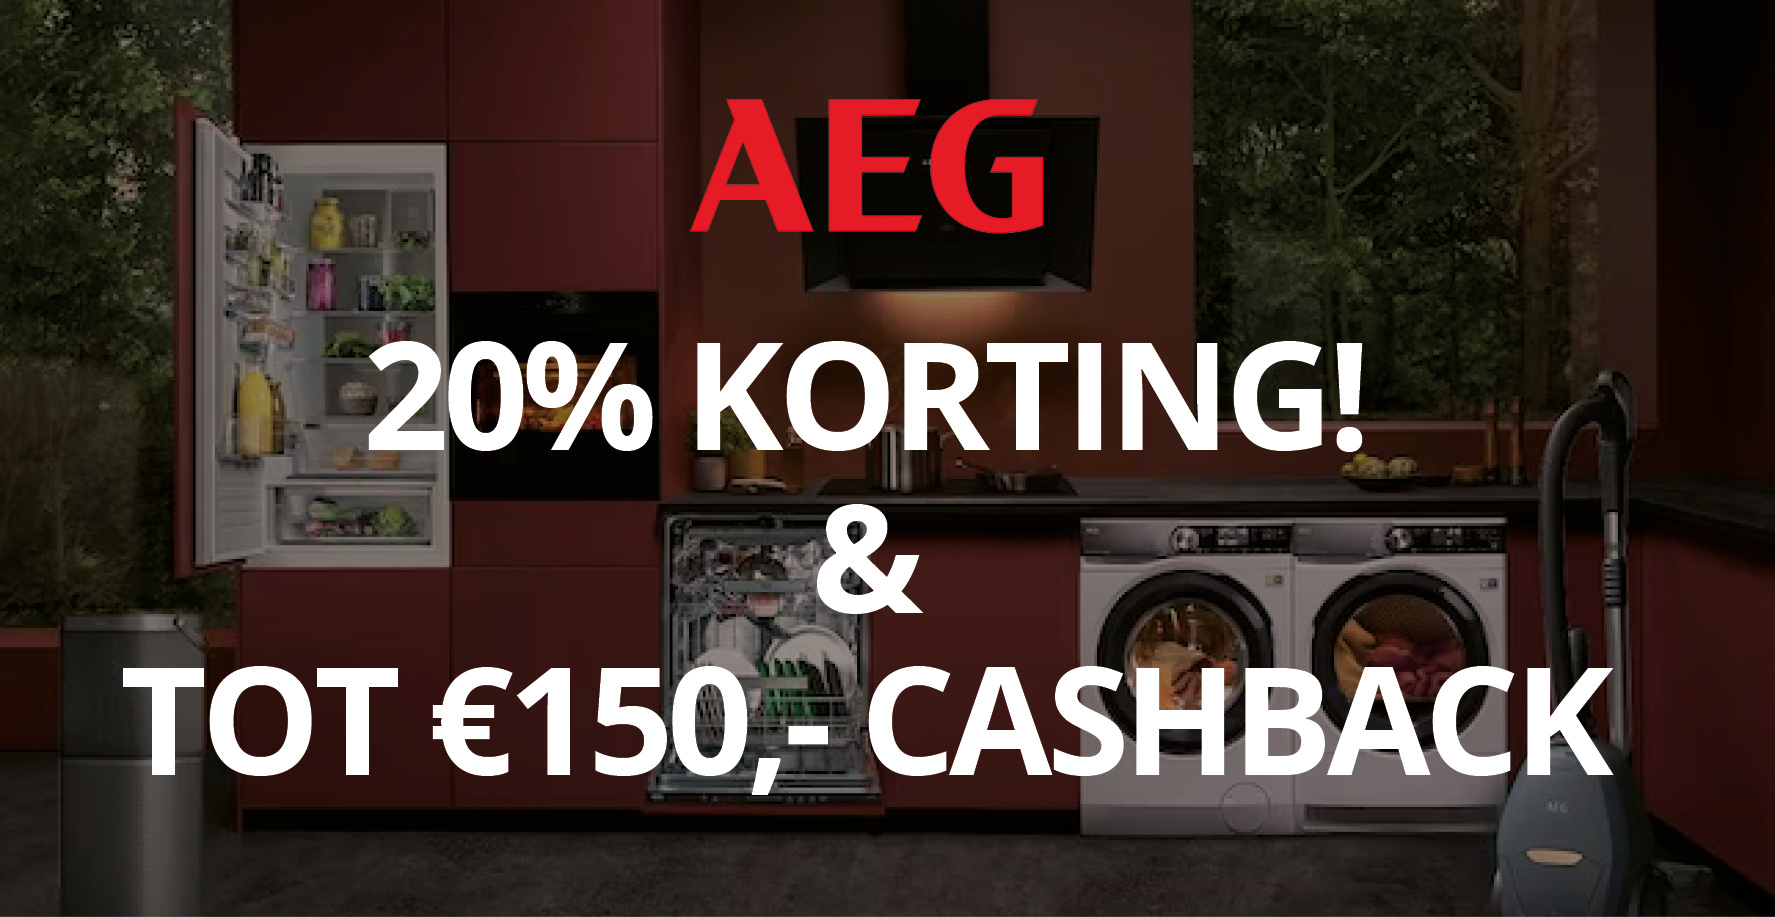 AEG actie: 20% korting & tot €150 cashback 